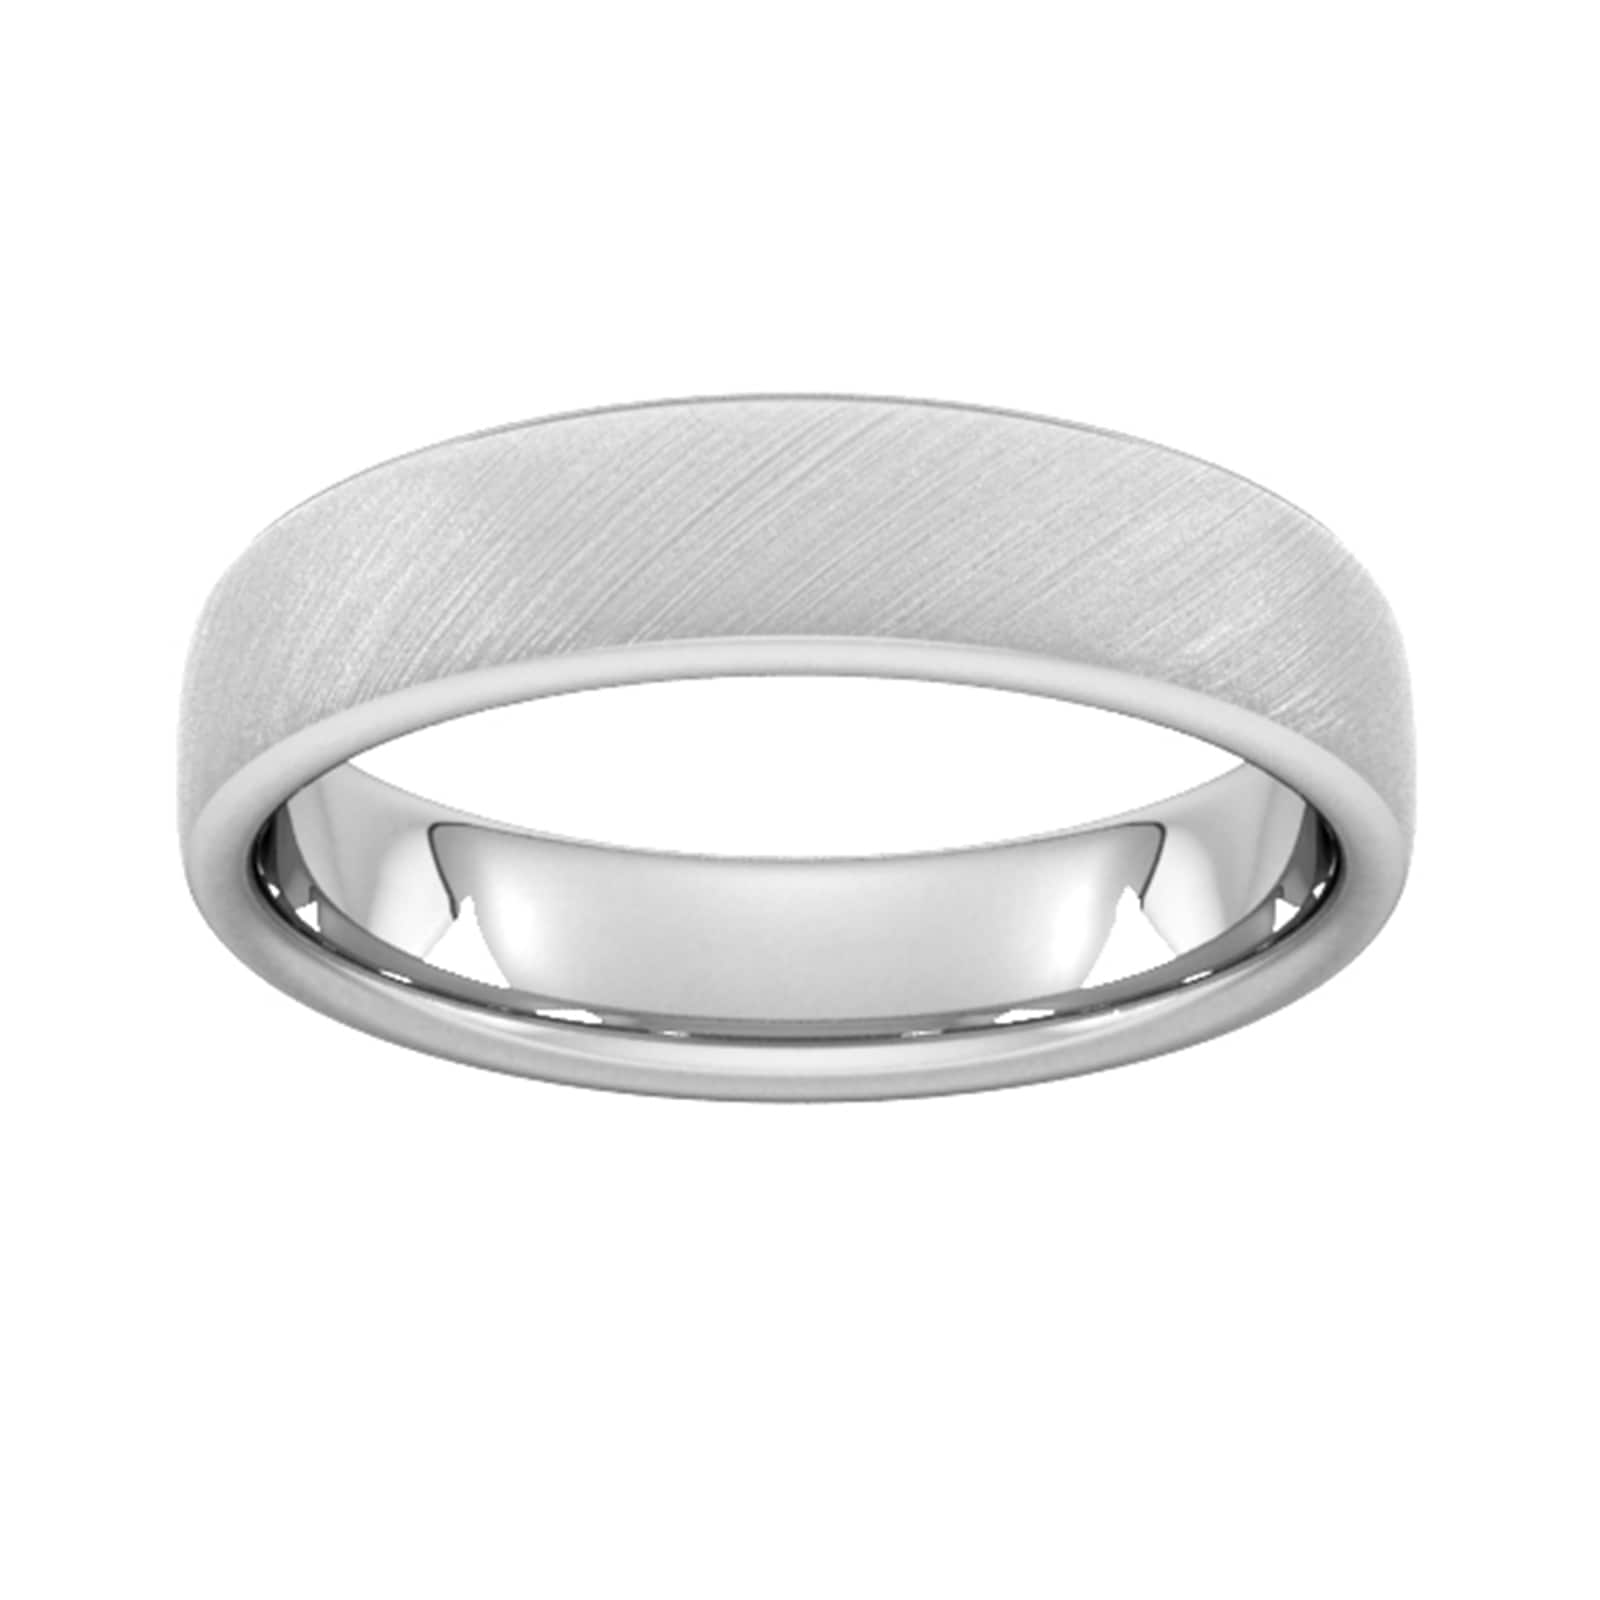 5mm Slight Court Heavy Diagonal Matt Finish Wedding Ring In 18 Carat White Gold - Ring Size G